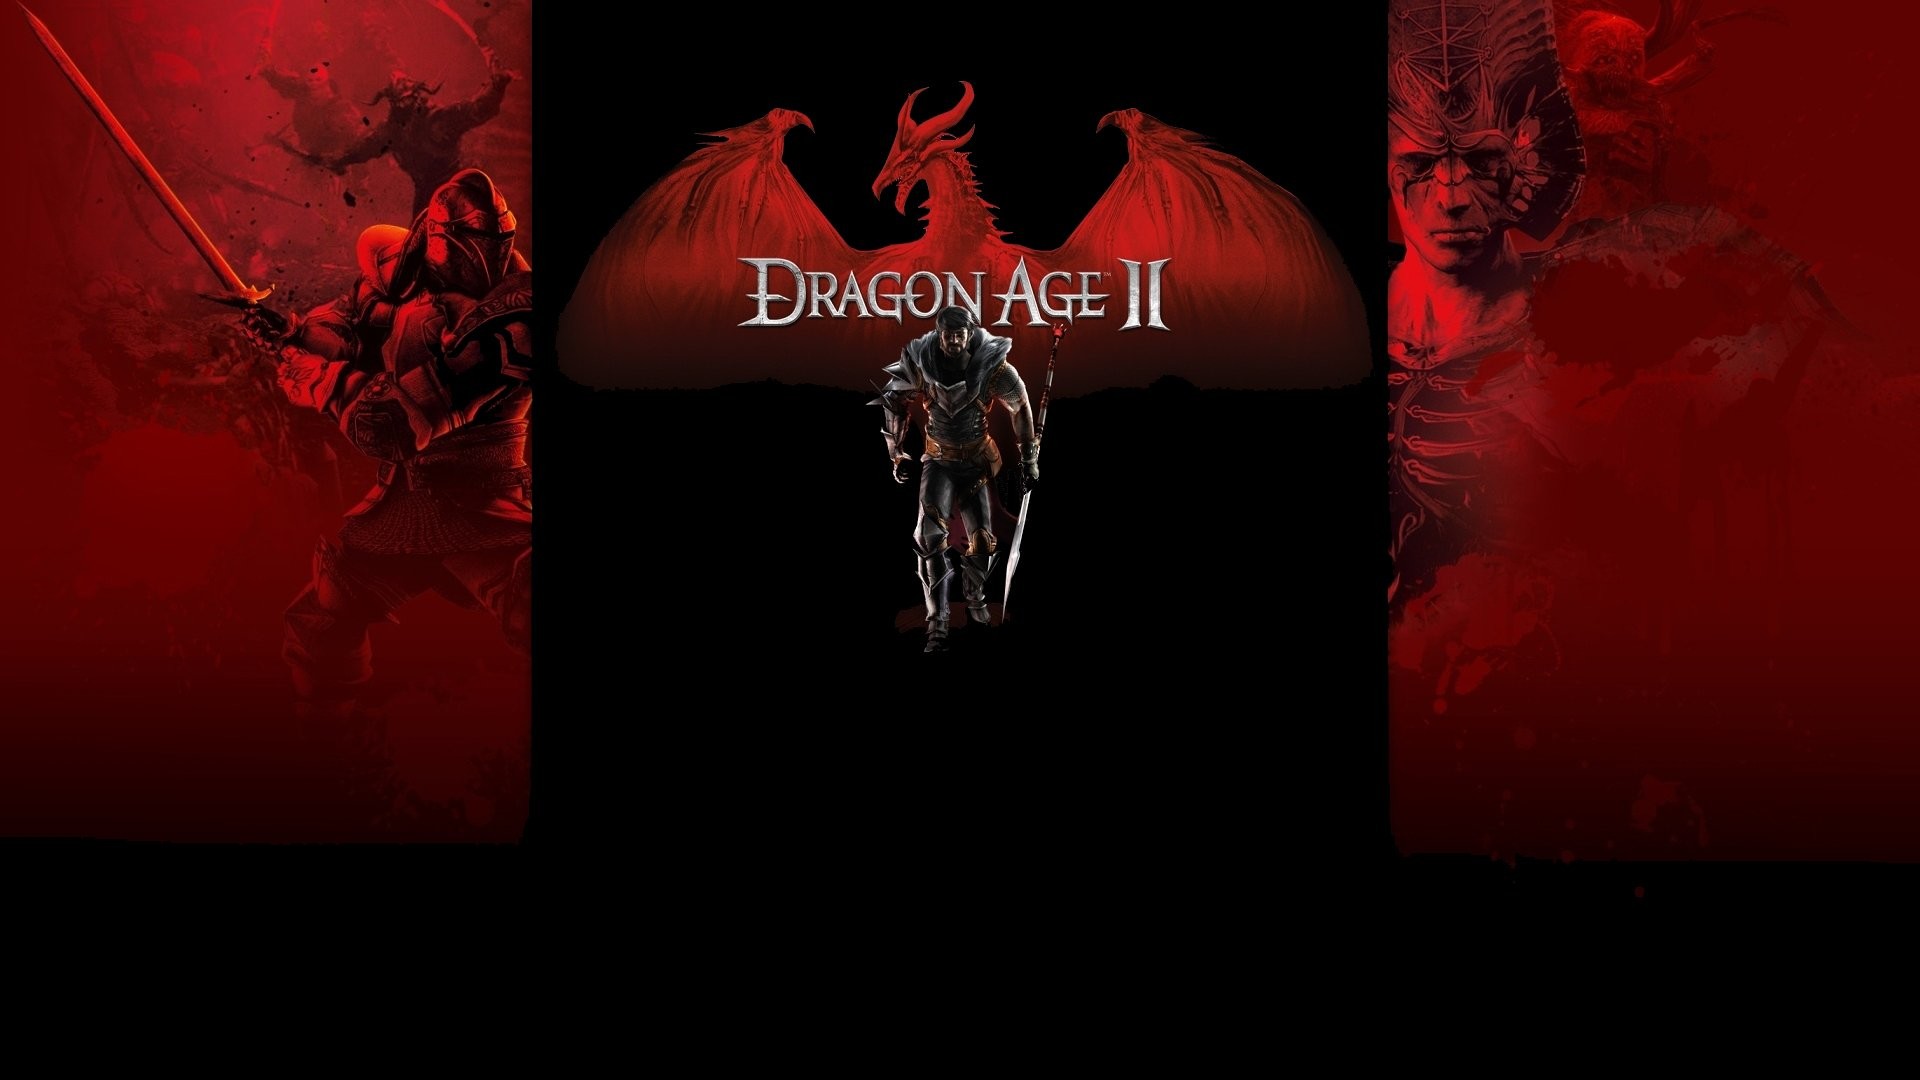 1920x1080 11 HD Dragon Age II Desktop Wallpapers For Free Download